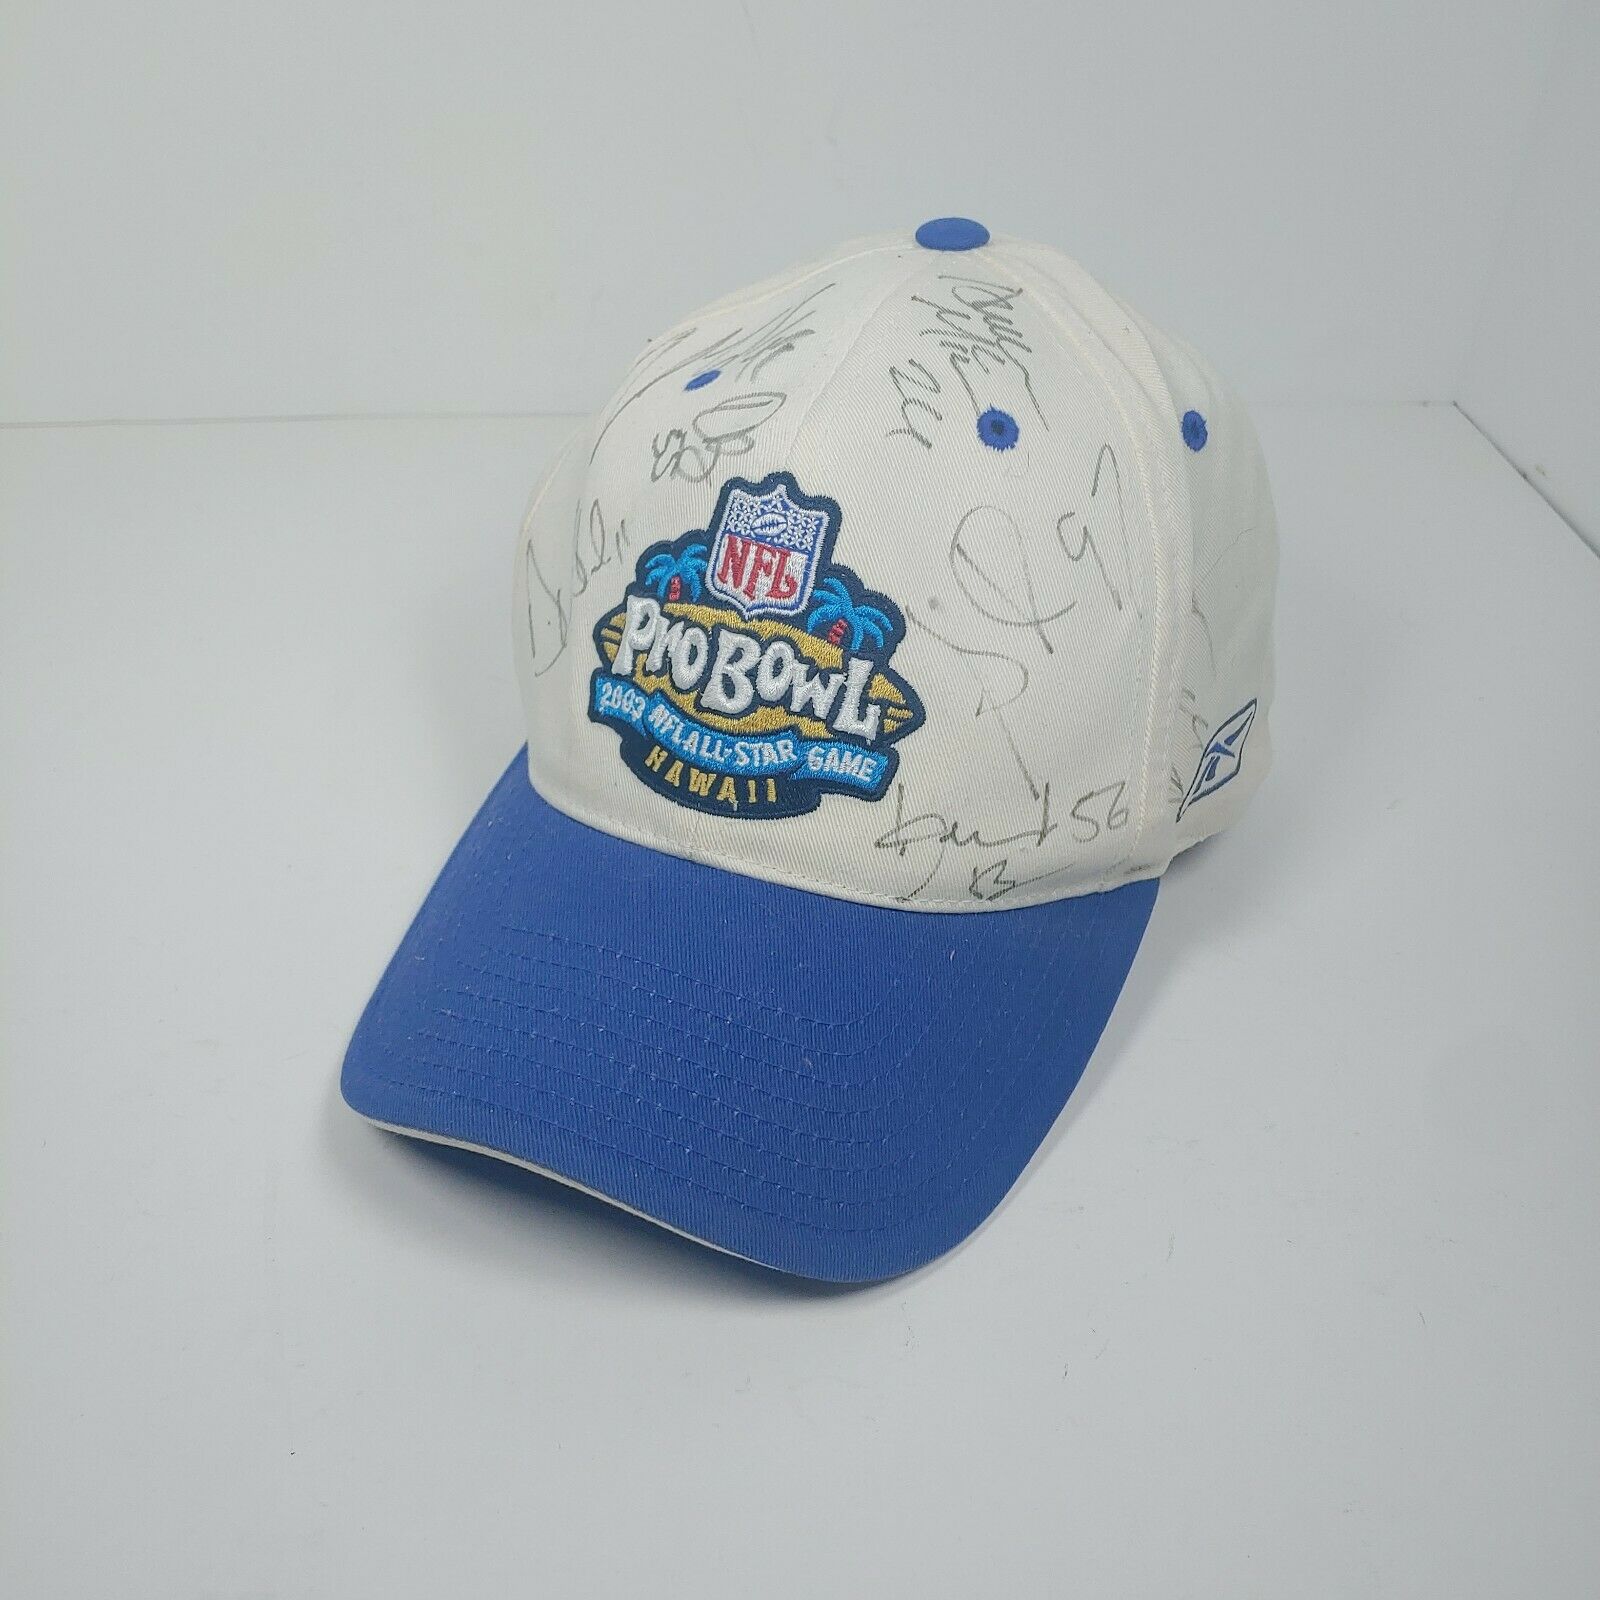 Vintage 2003 Autographed NFL PRO BOWL Hat 8 Signature's Hand Signed at Game